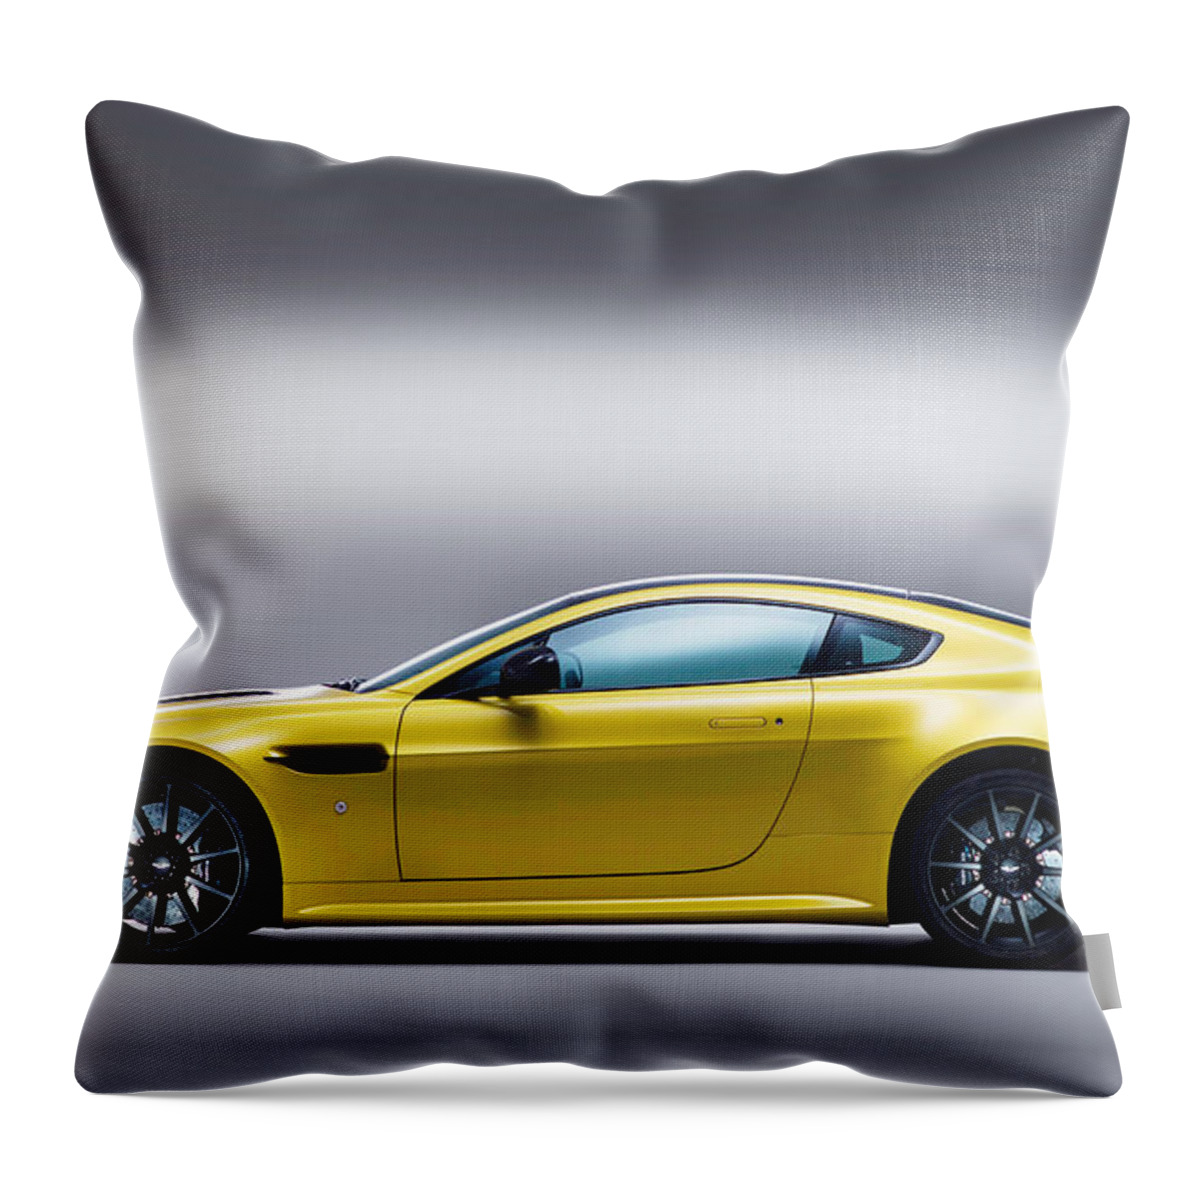 2014 Aston Martin V12 Vantage S Throw Pillow featuring the digital art 2014 Aston Martin V12 Vantage S by Super Lovely